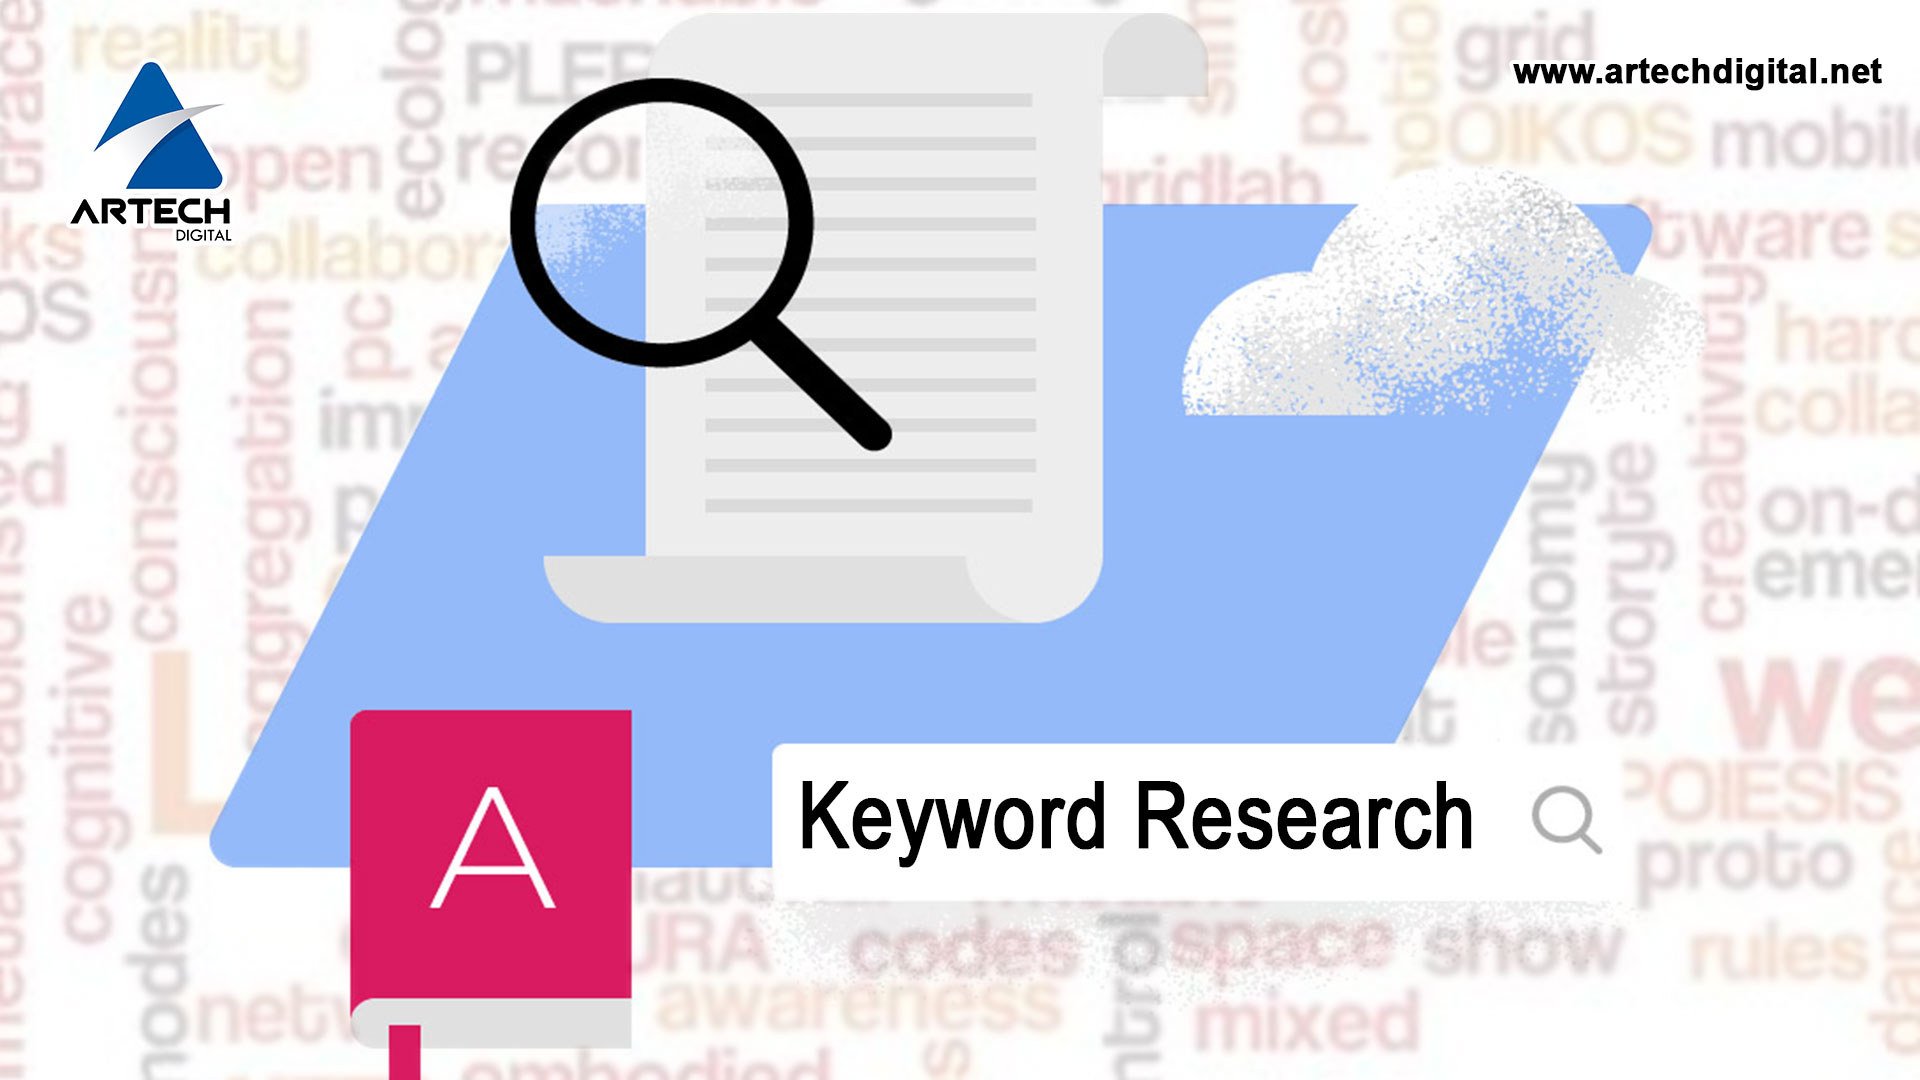 artech digital - keyword research